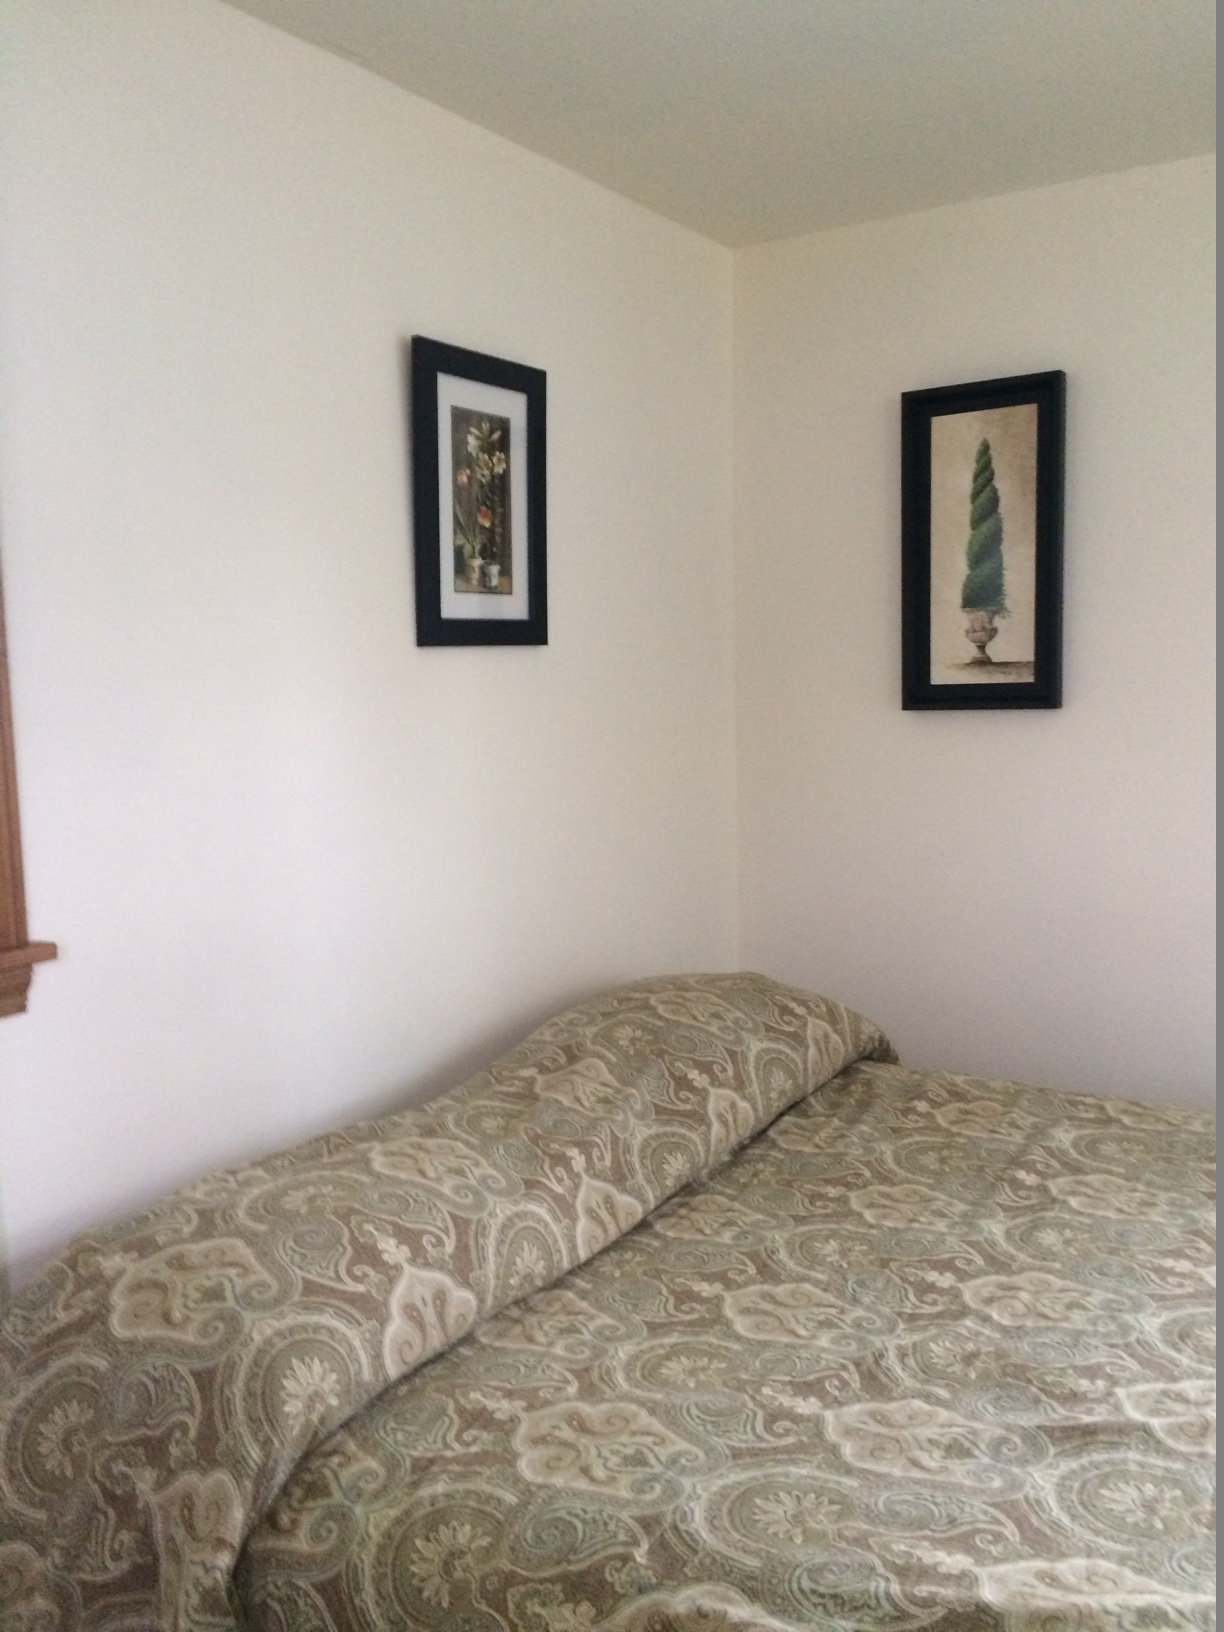 Blue Spruce Motel - Cabin Number 18 (1) - Interior Bed and Art.jpg